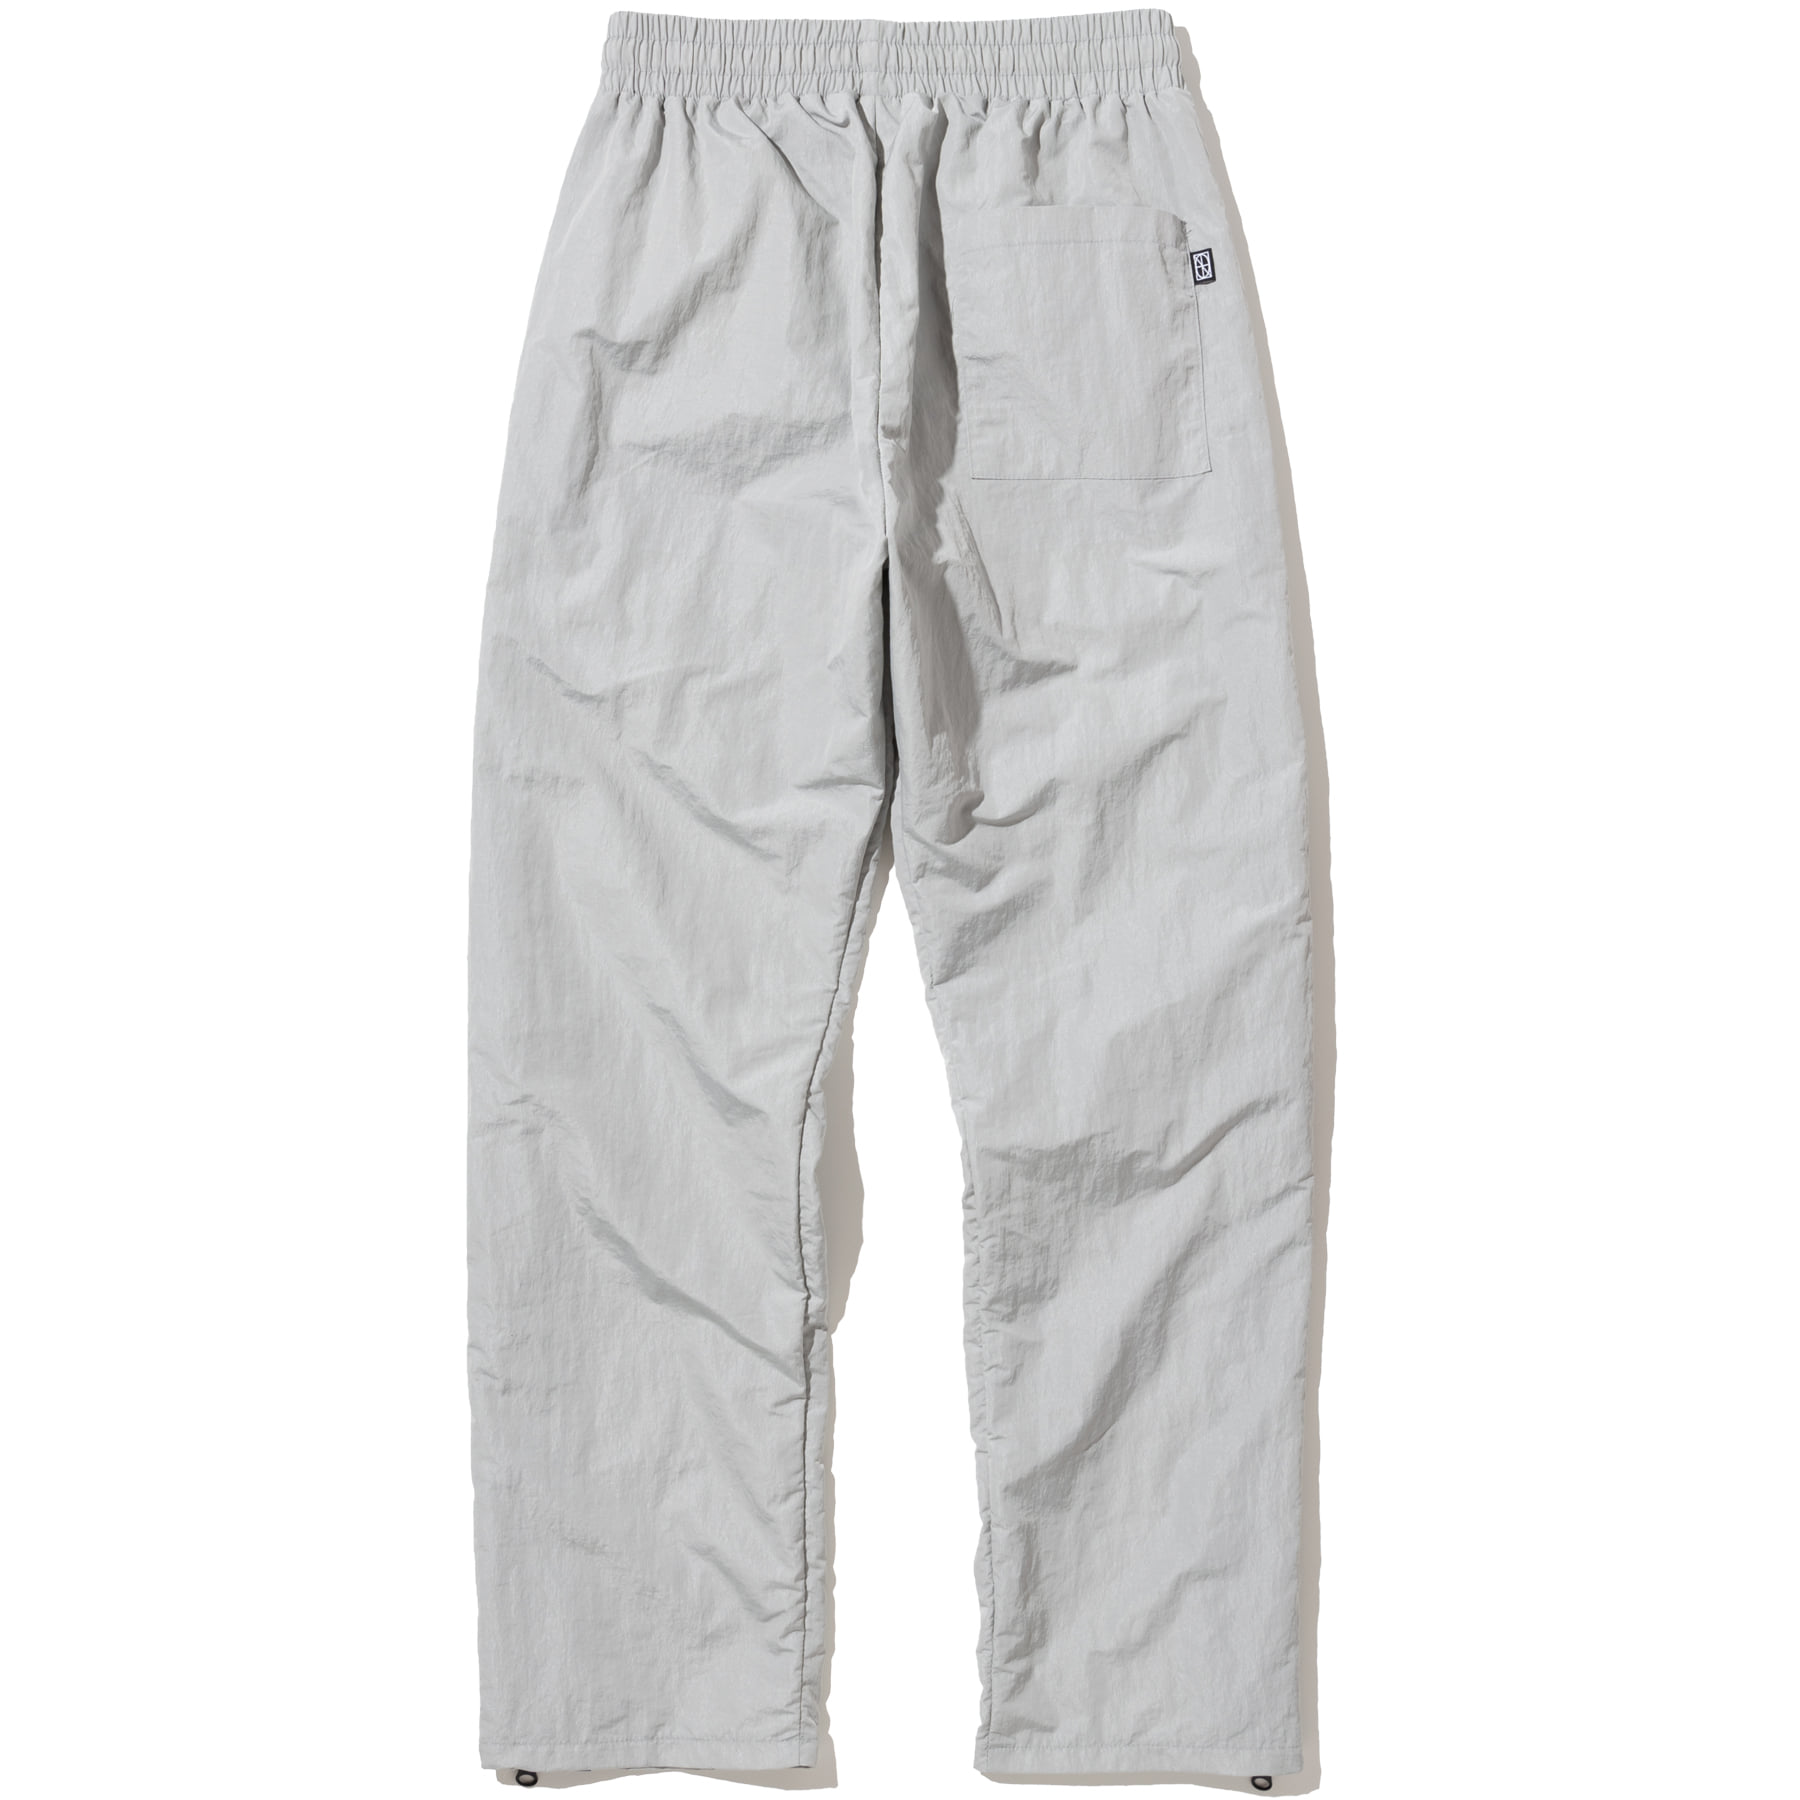 Two Way Side Zipper Nylon Pants - Light Grey,NOT4NERD